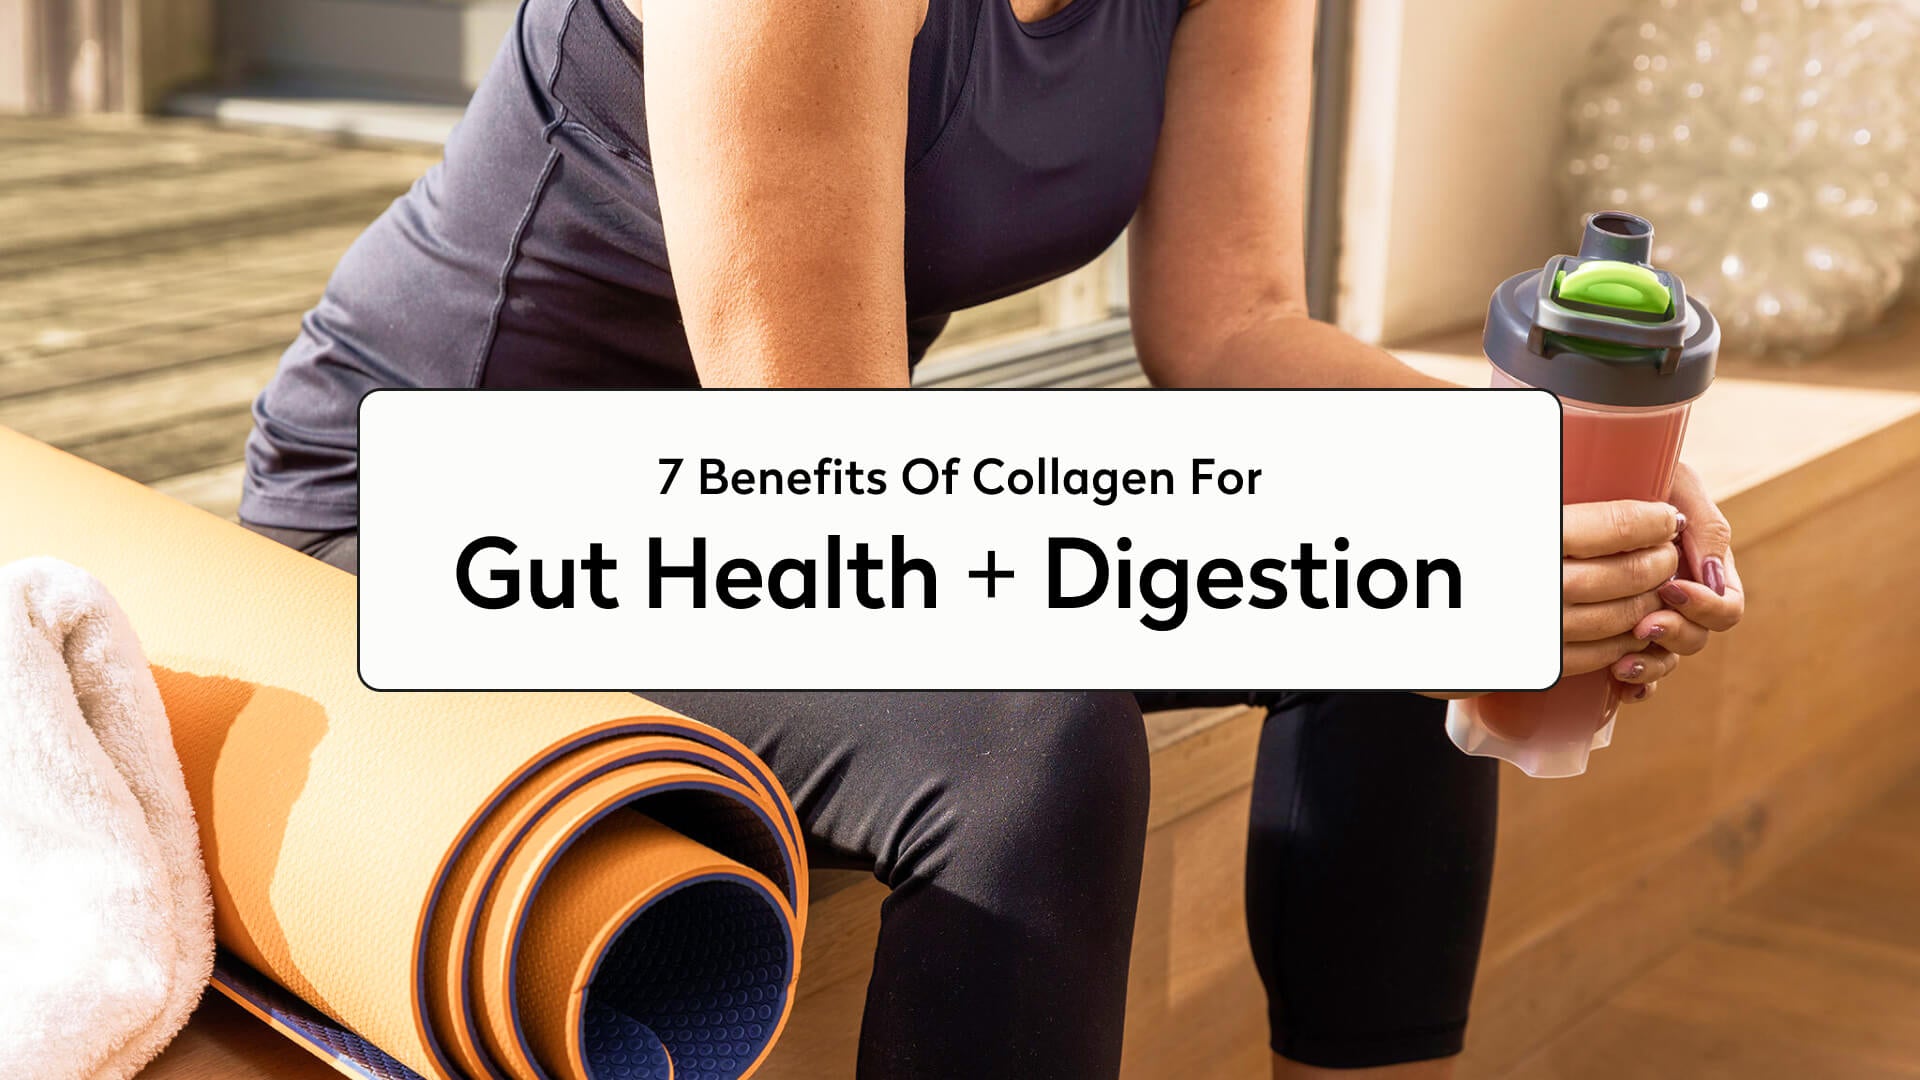 7 Benefits of Collagen for Gut Health & Digestion